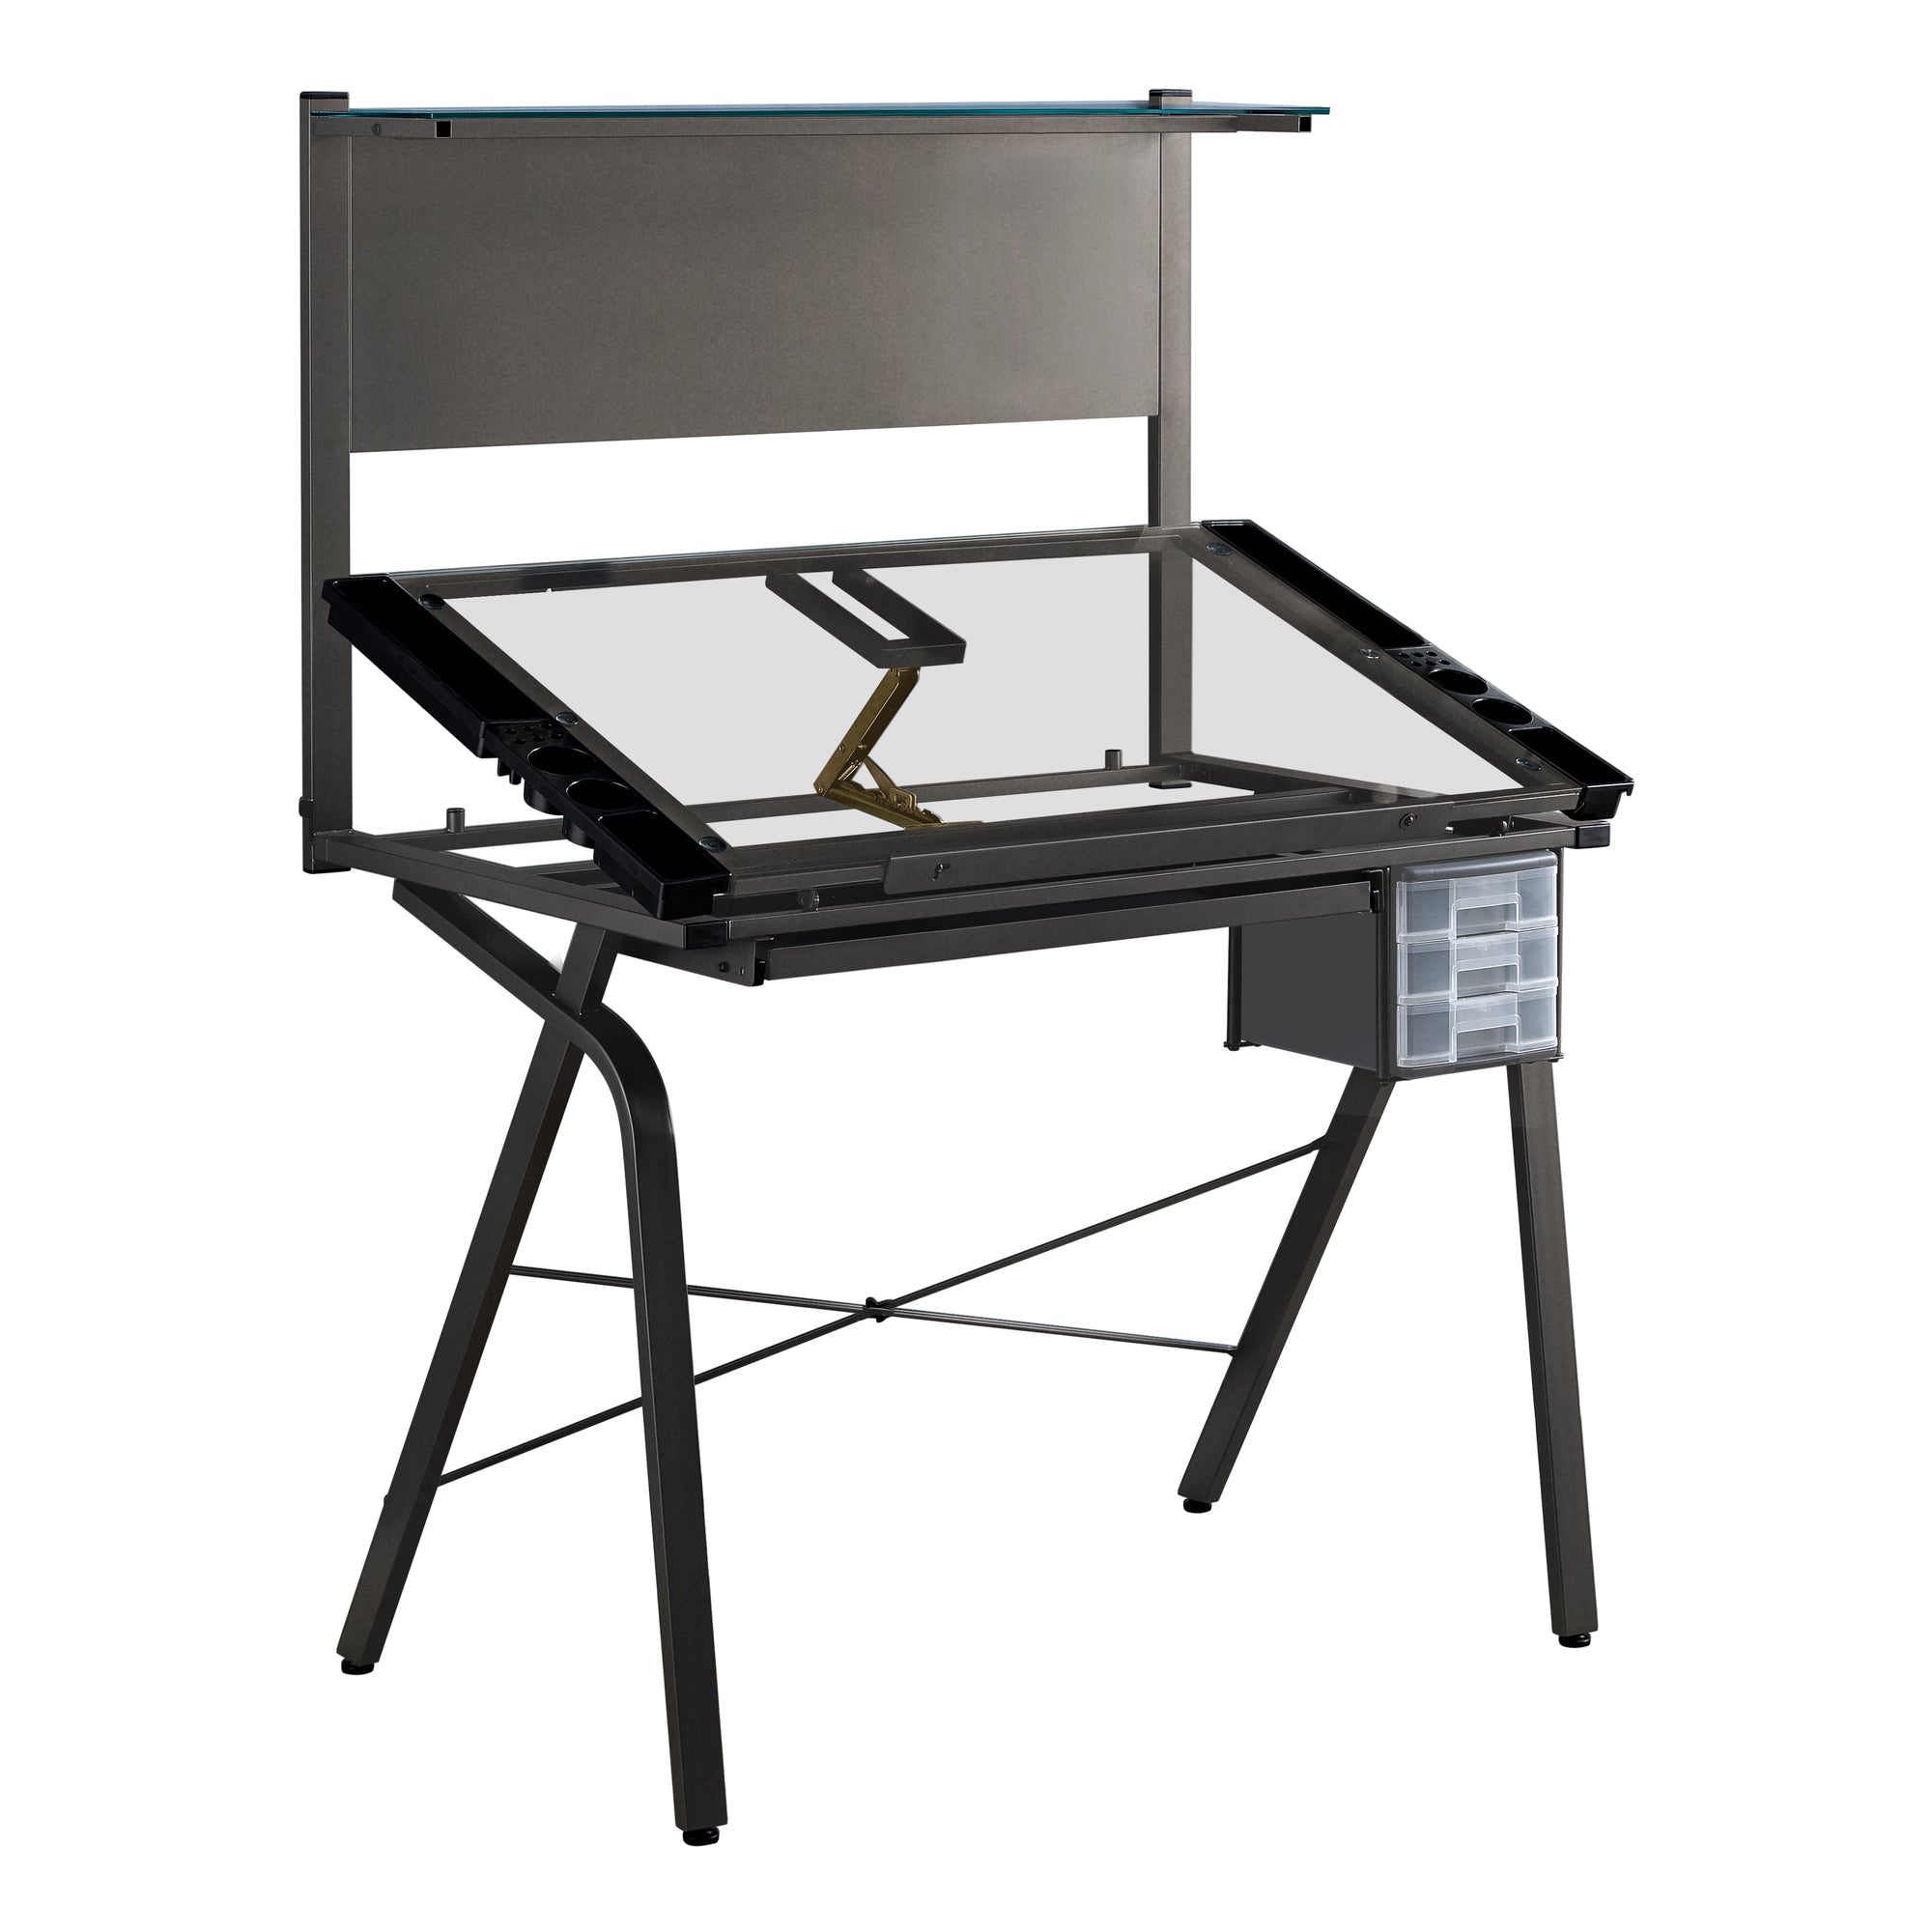 MN-767034    Drafting Table - Adjustable / Grey Metal / Tempered Glass